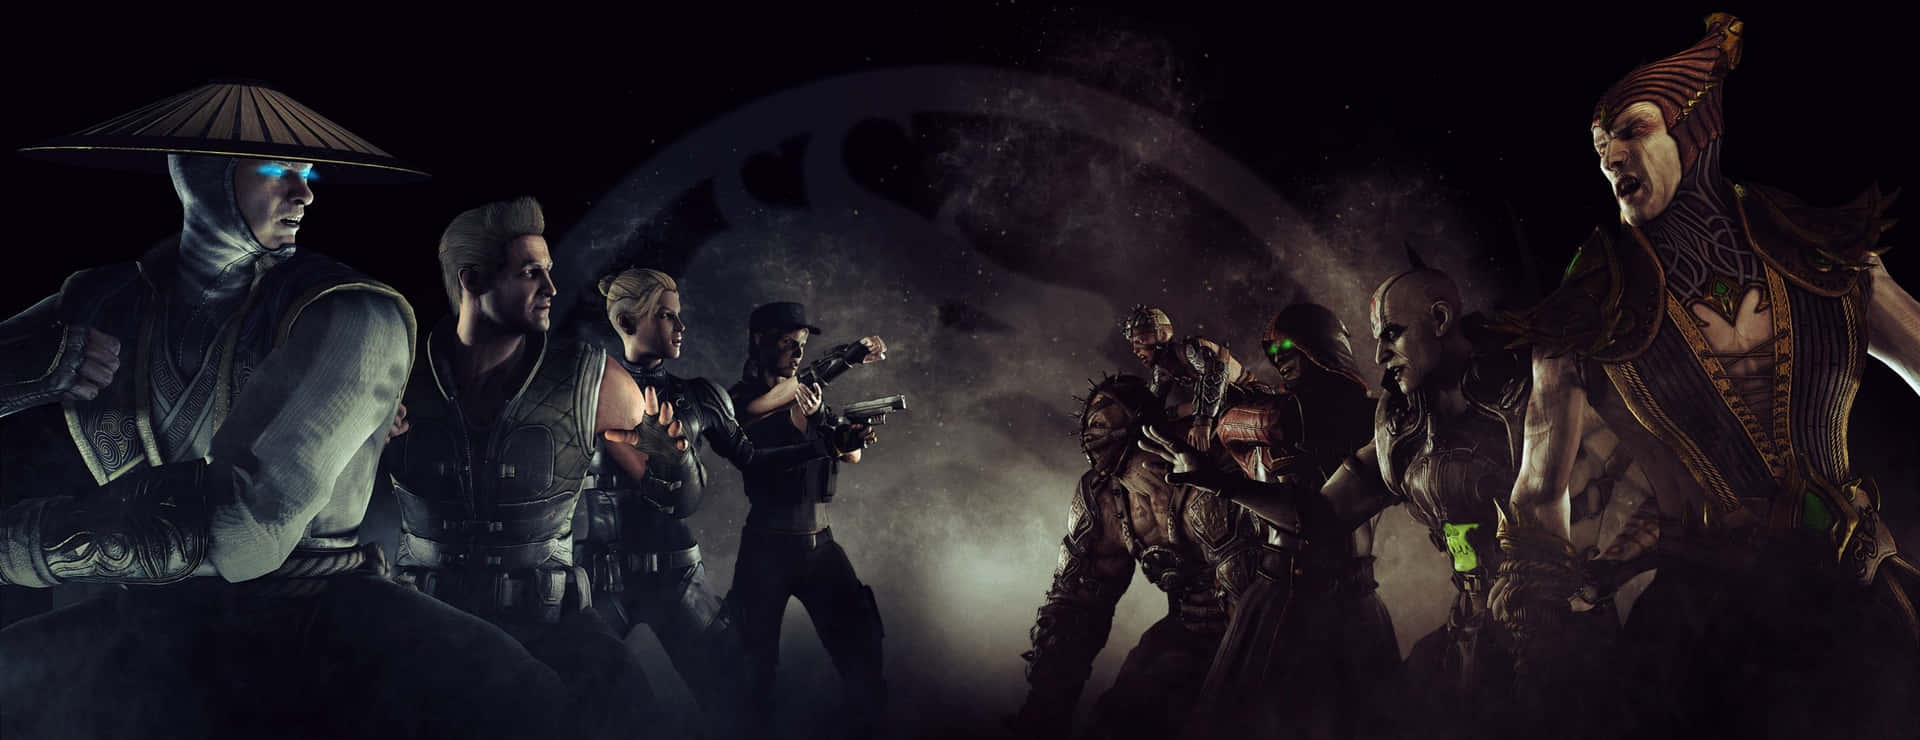 Mortalkombat X Ultra Breitbild-gaming Wallpaper